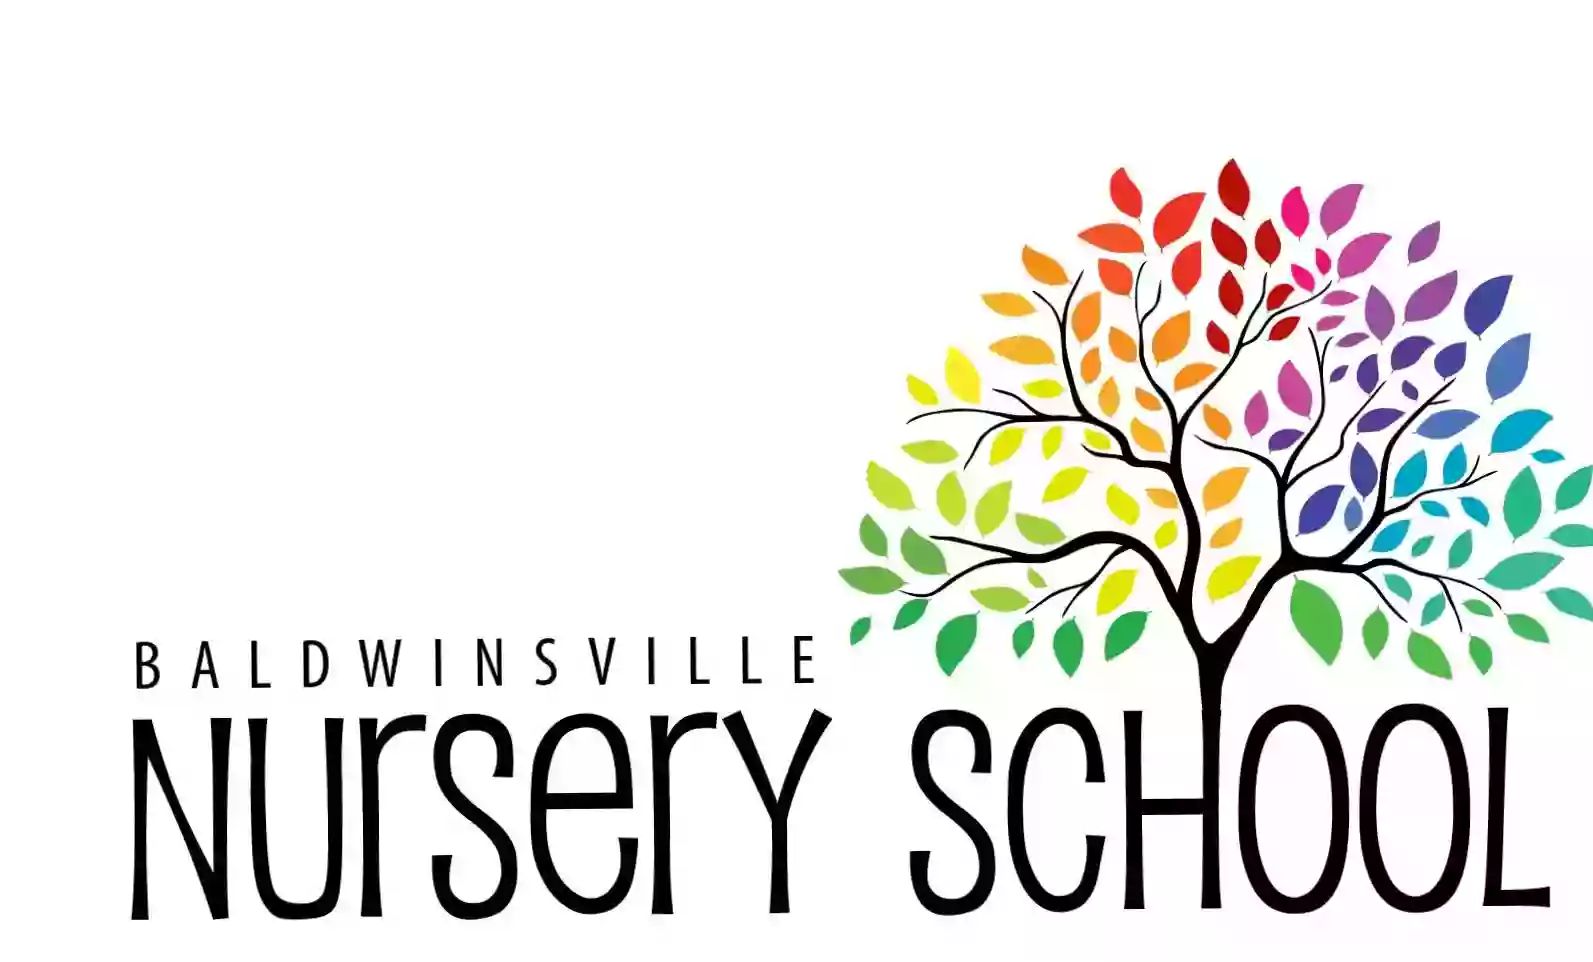 Baldwinsville Nursery School